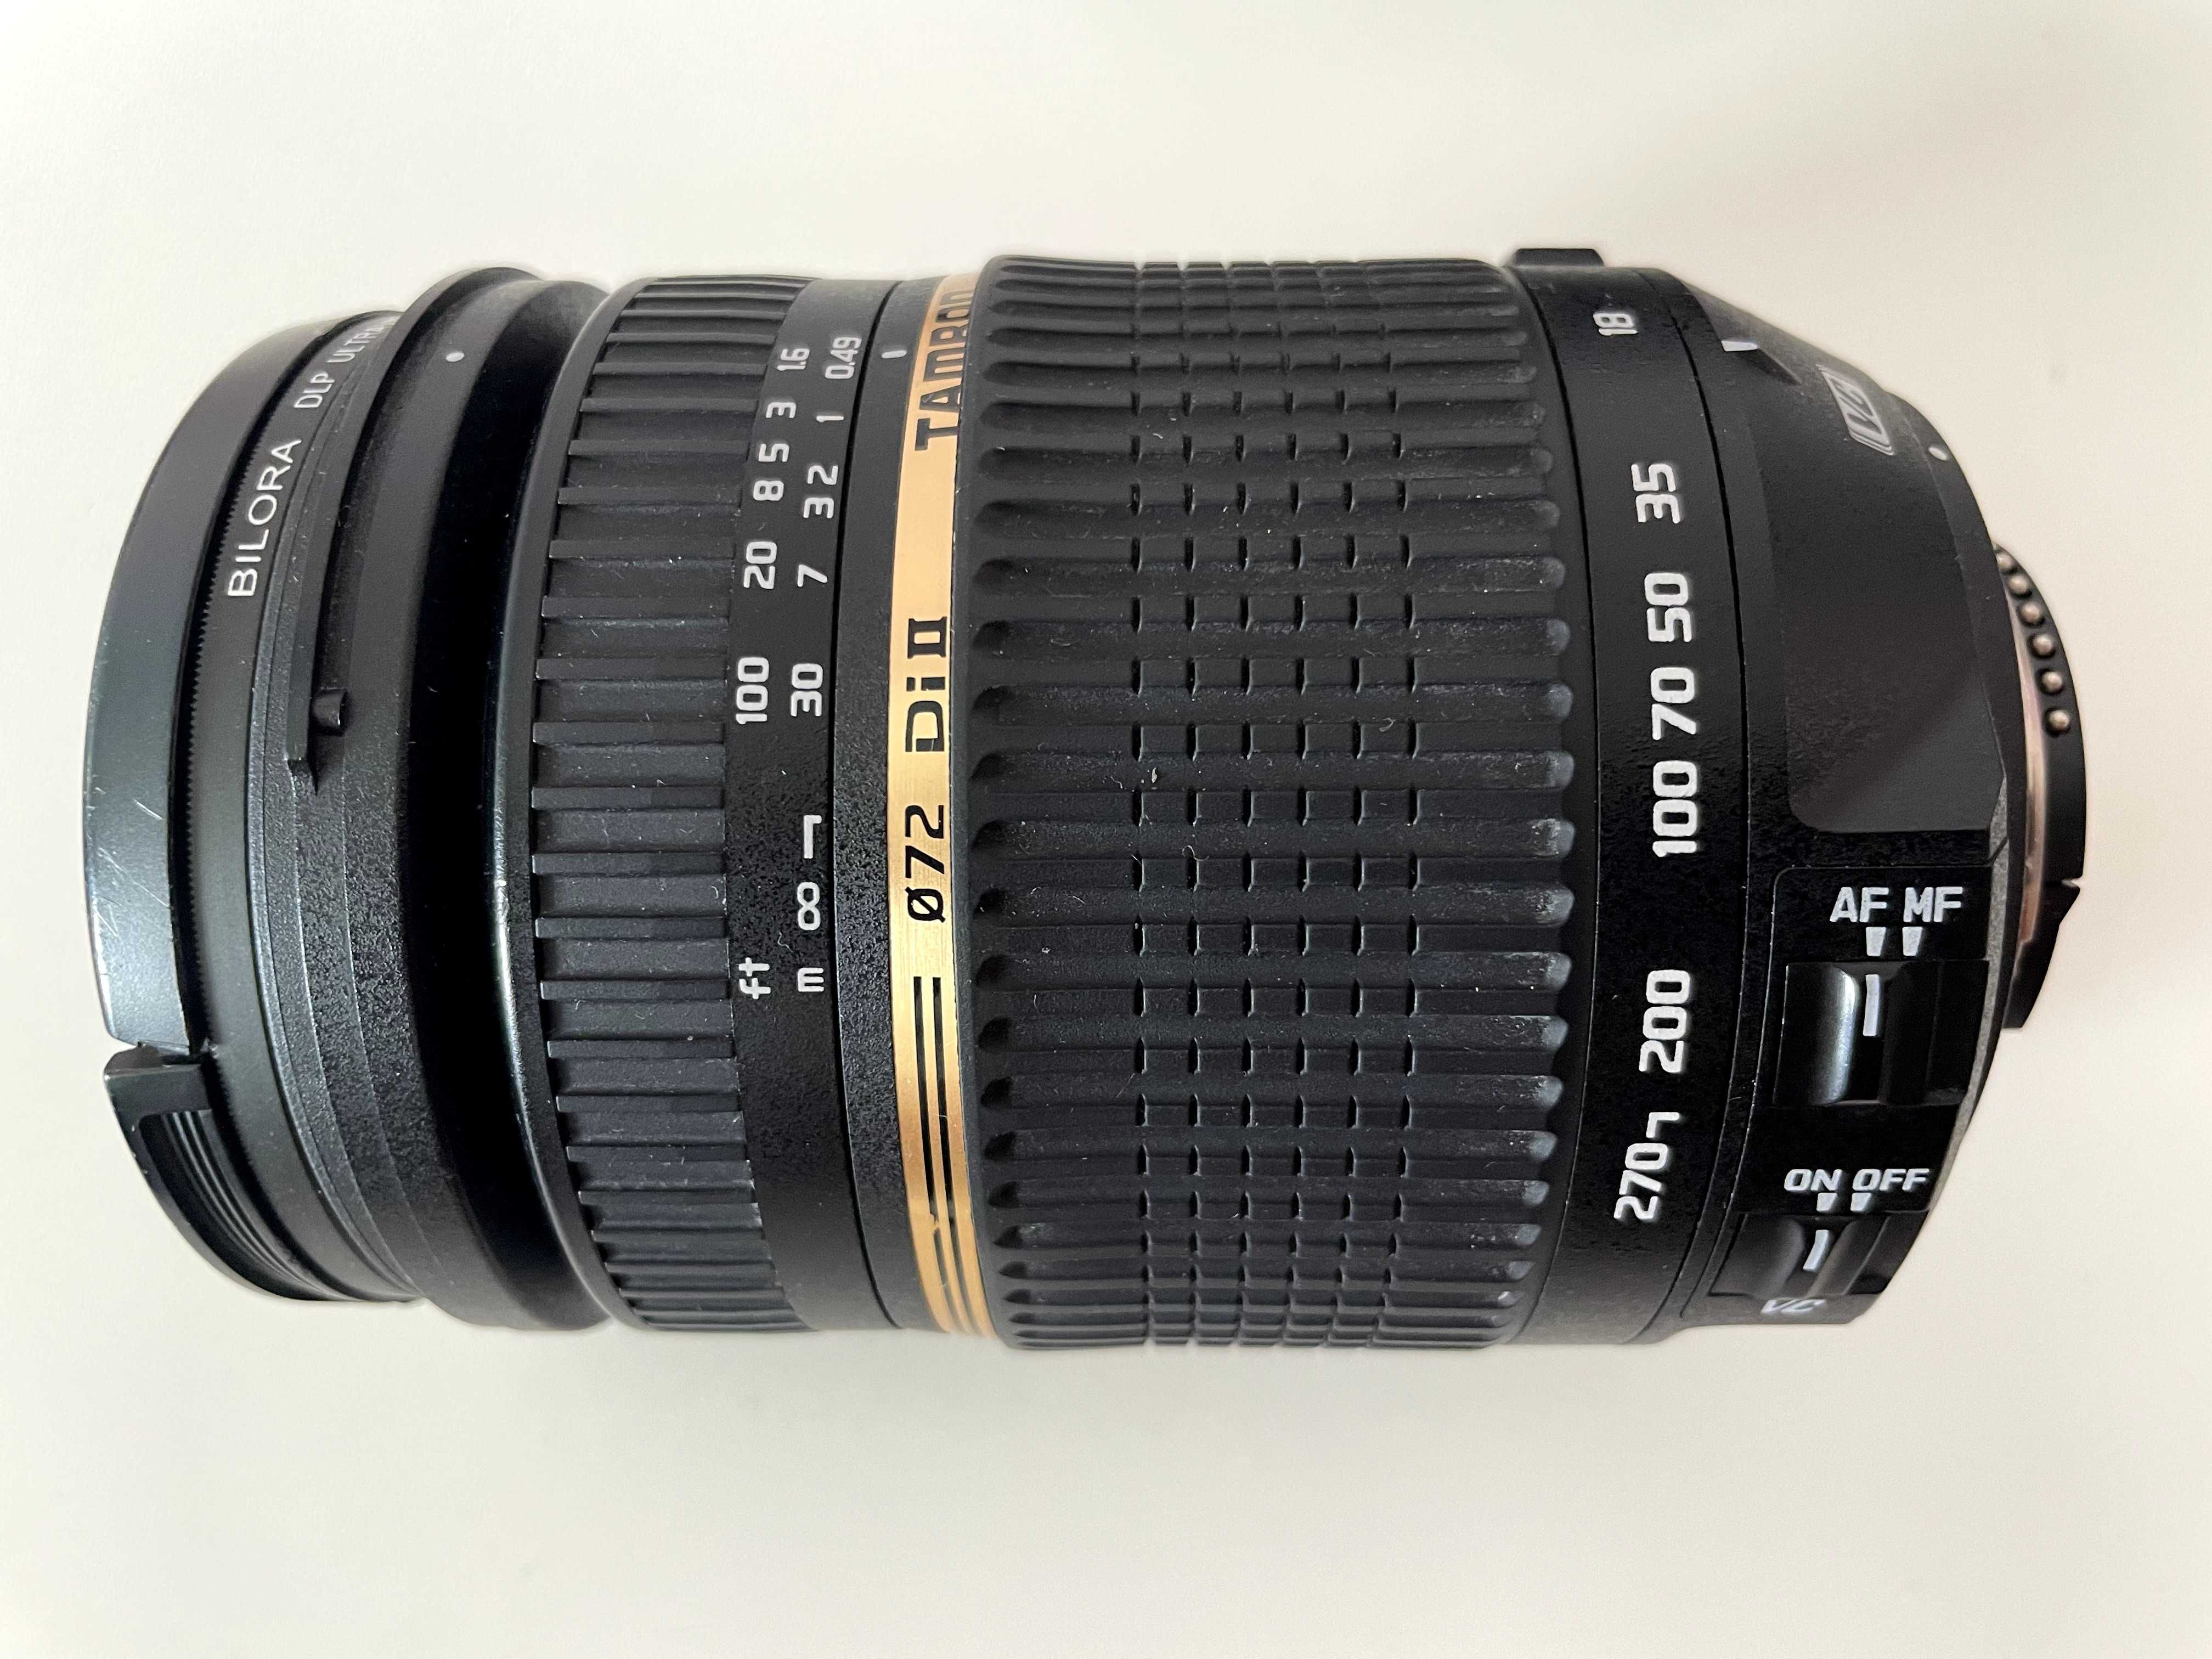 Vând aparat foto DSLR Nikon D7200 cu obiectiv Tamron 18-270 mm!